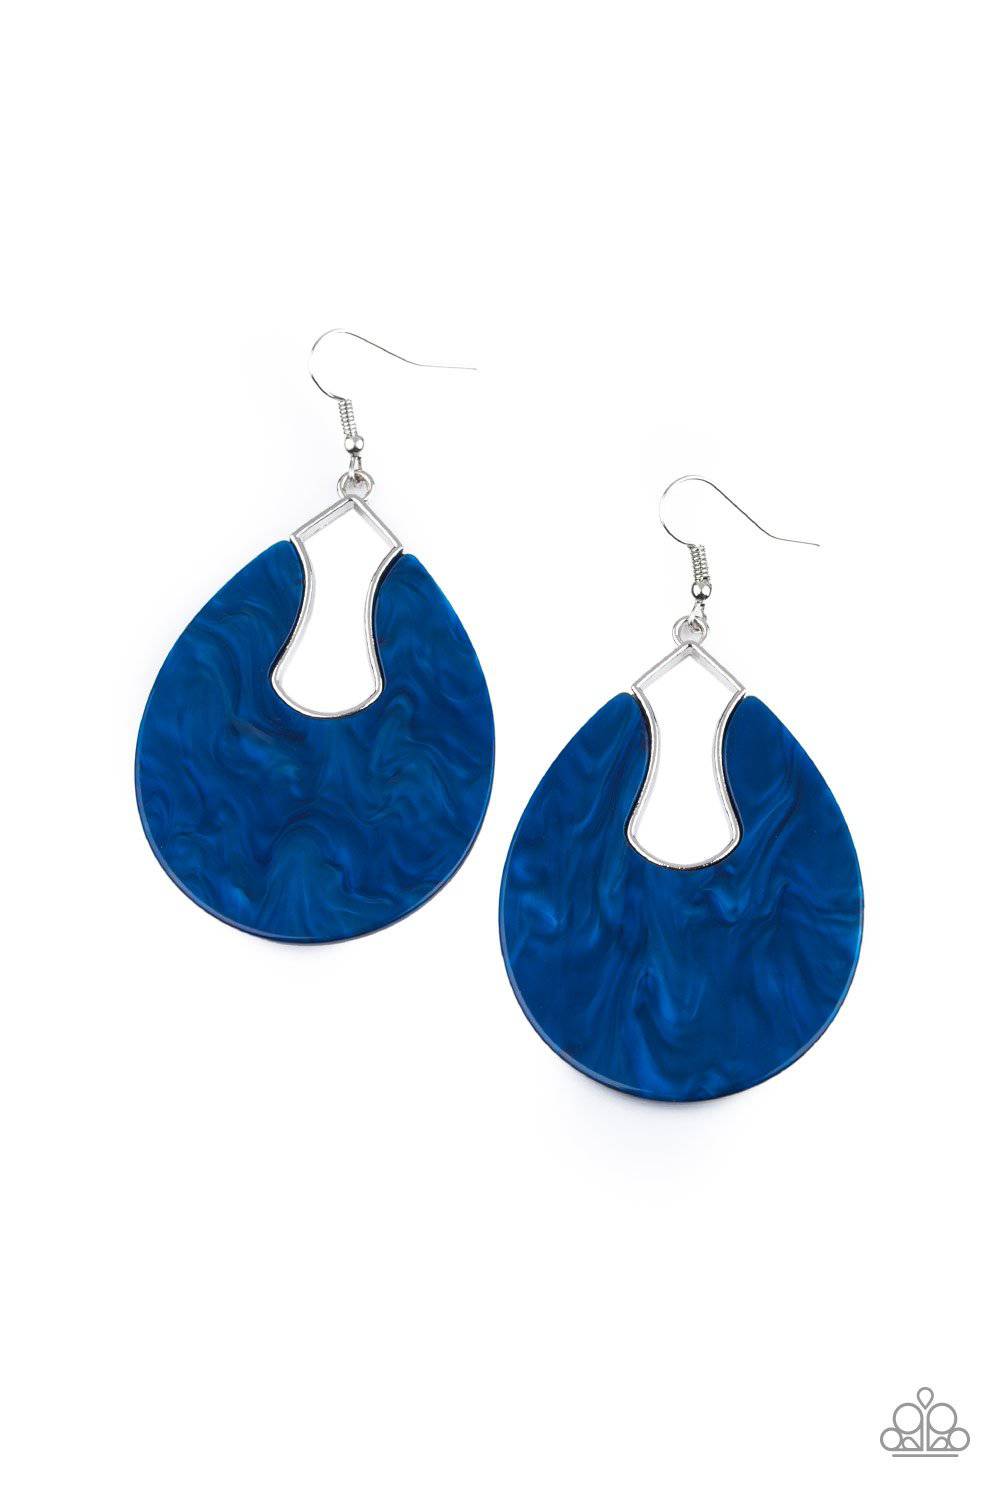 Pool Hopper - Blue Acrylic Earrings - Paparazzi Accessories - GlaMarous Titi Jewels